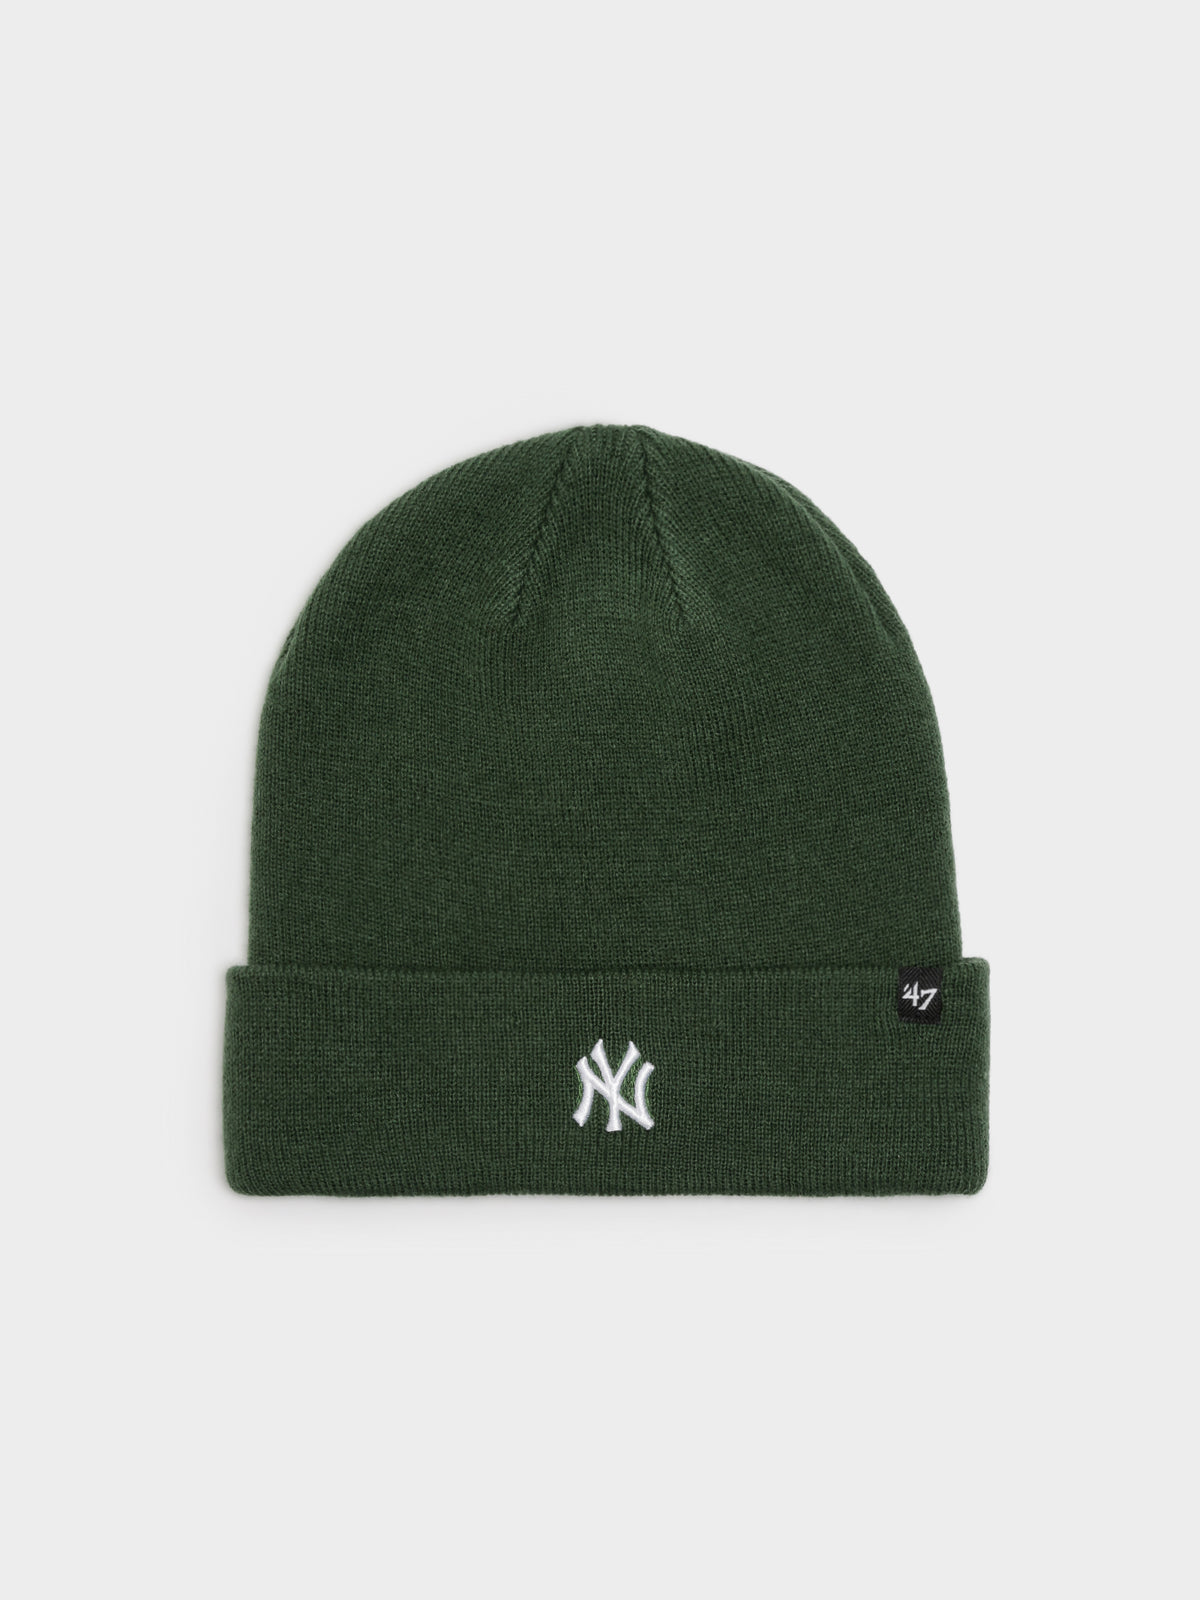 NY Yankees Beanie in Green